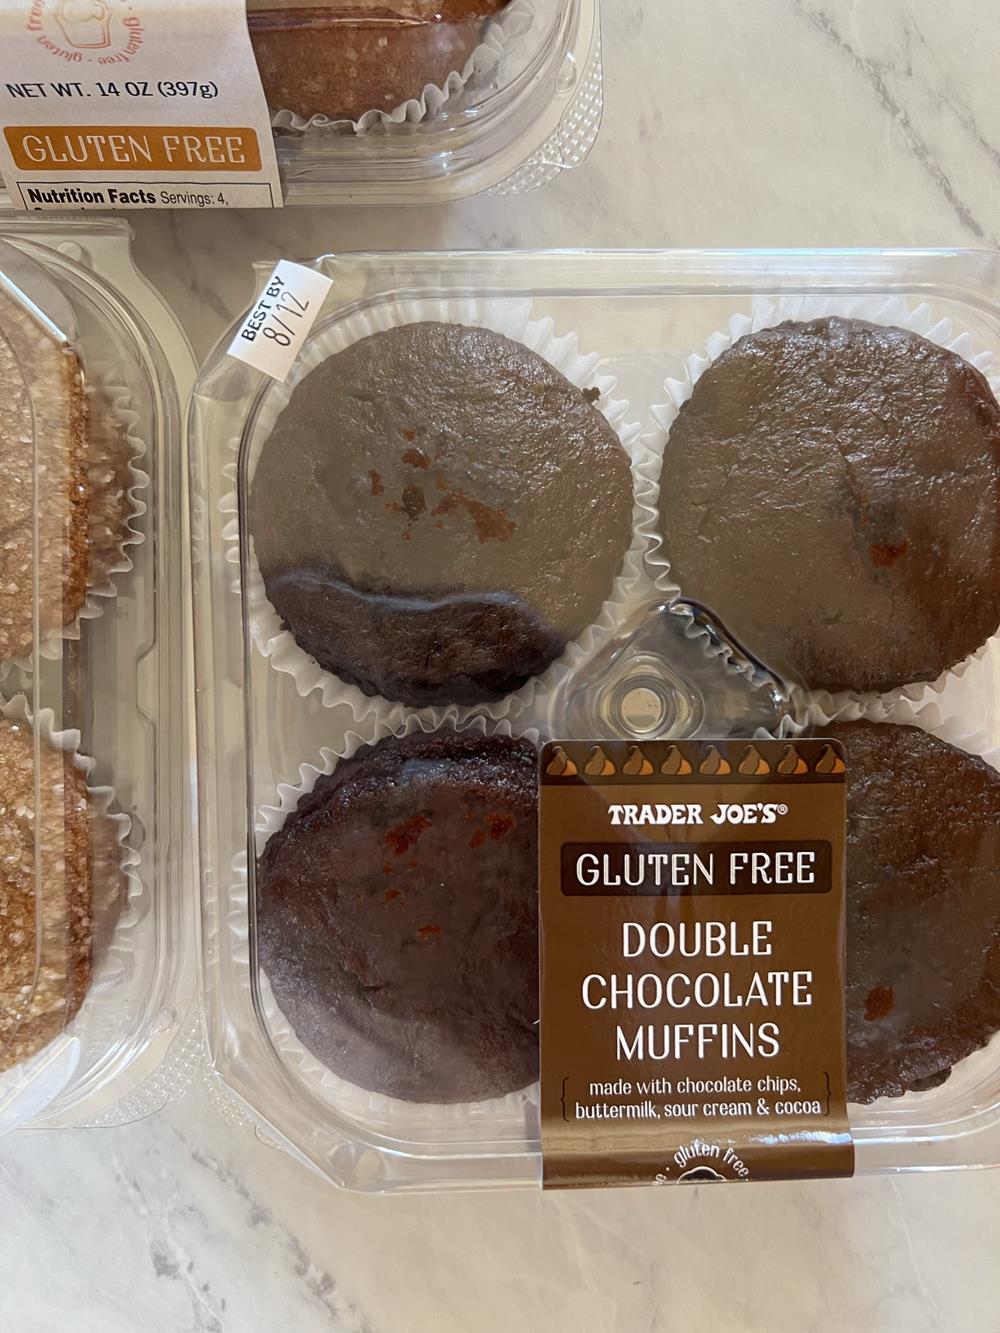 Trader Joe's Gluten Free Chocolate Muffins in package